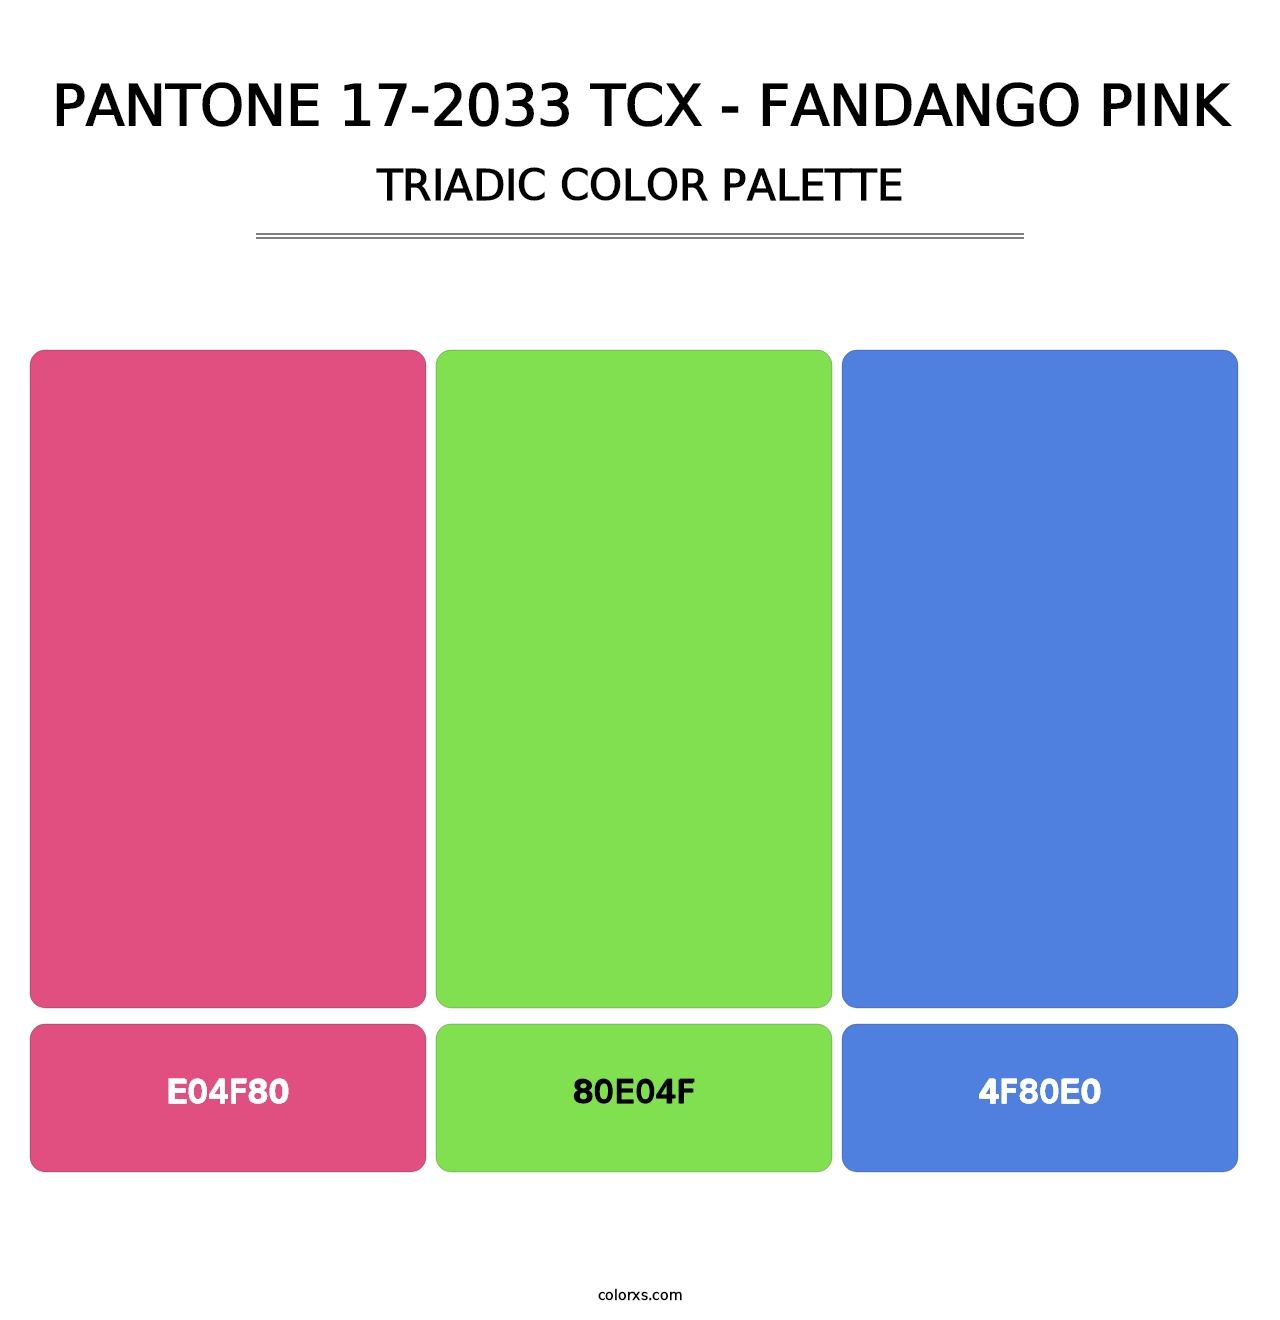 PANTONE 17-2033 TCX - Fandango Pink - Triadic Color Palette